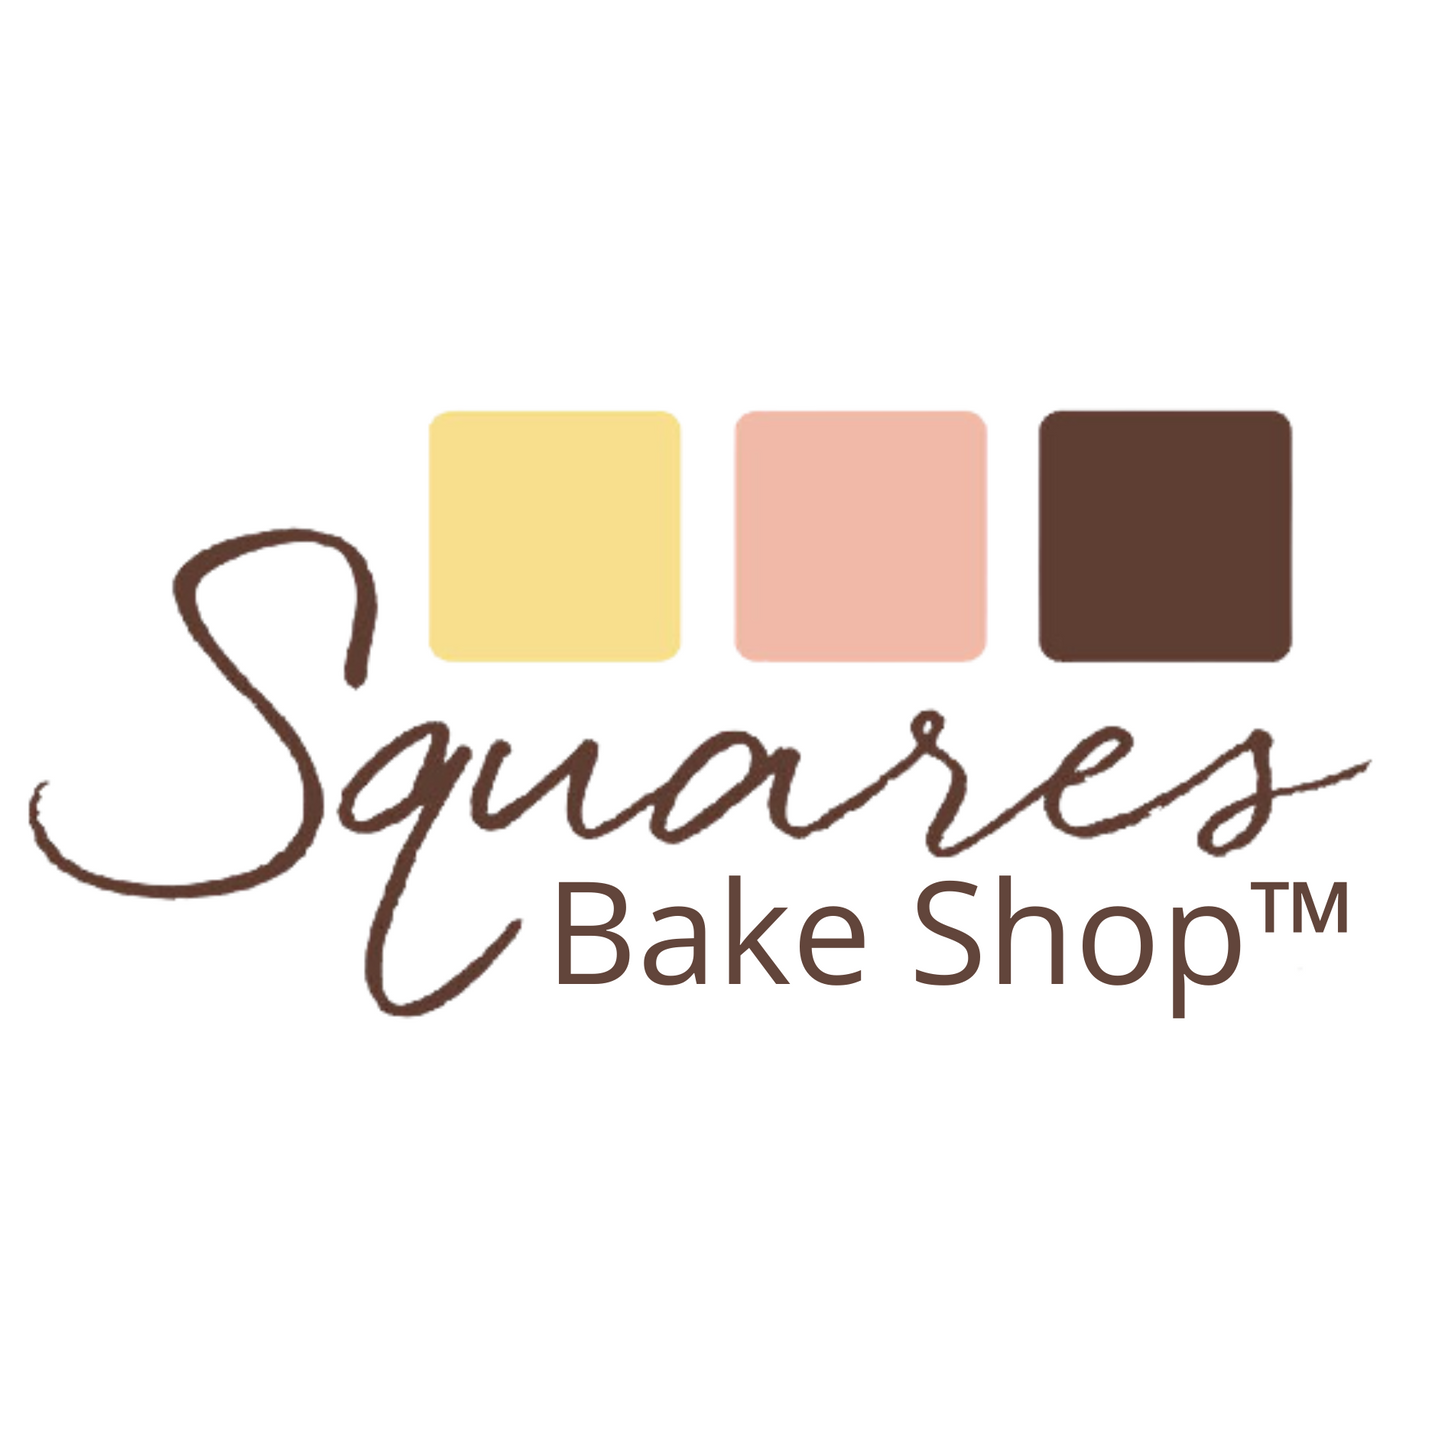 Squares Bake Shop